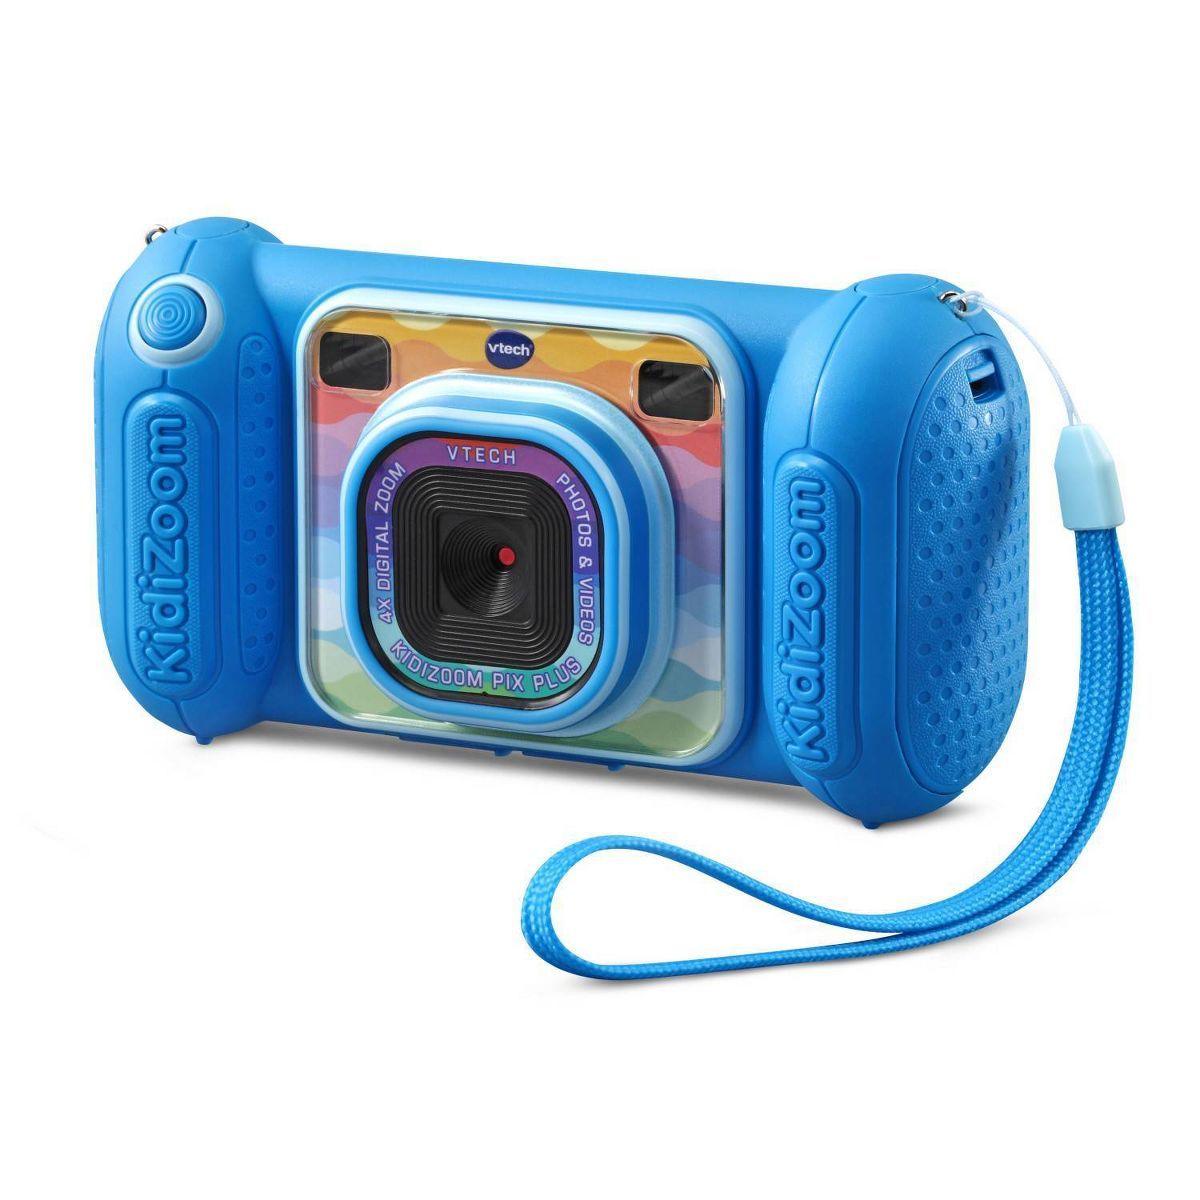 VTech KidiZoom Camera Pix Plus - Blue | Target